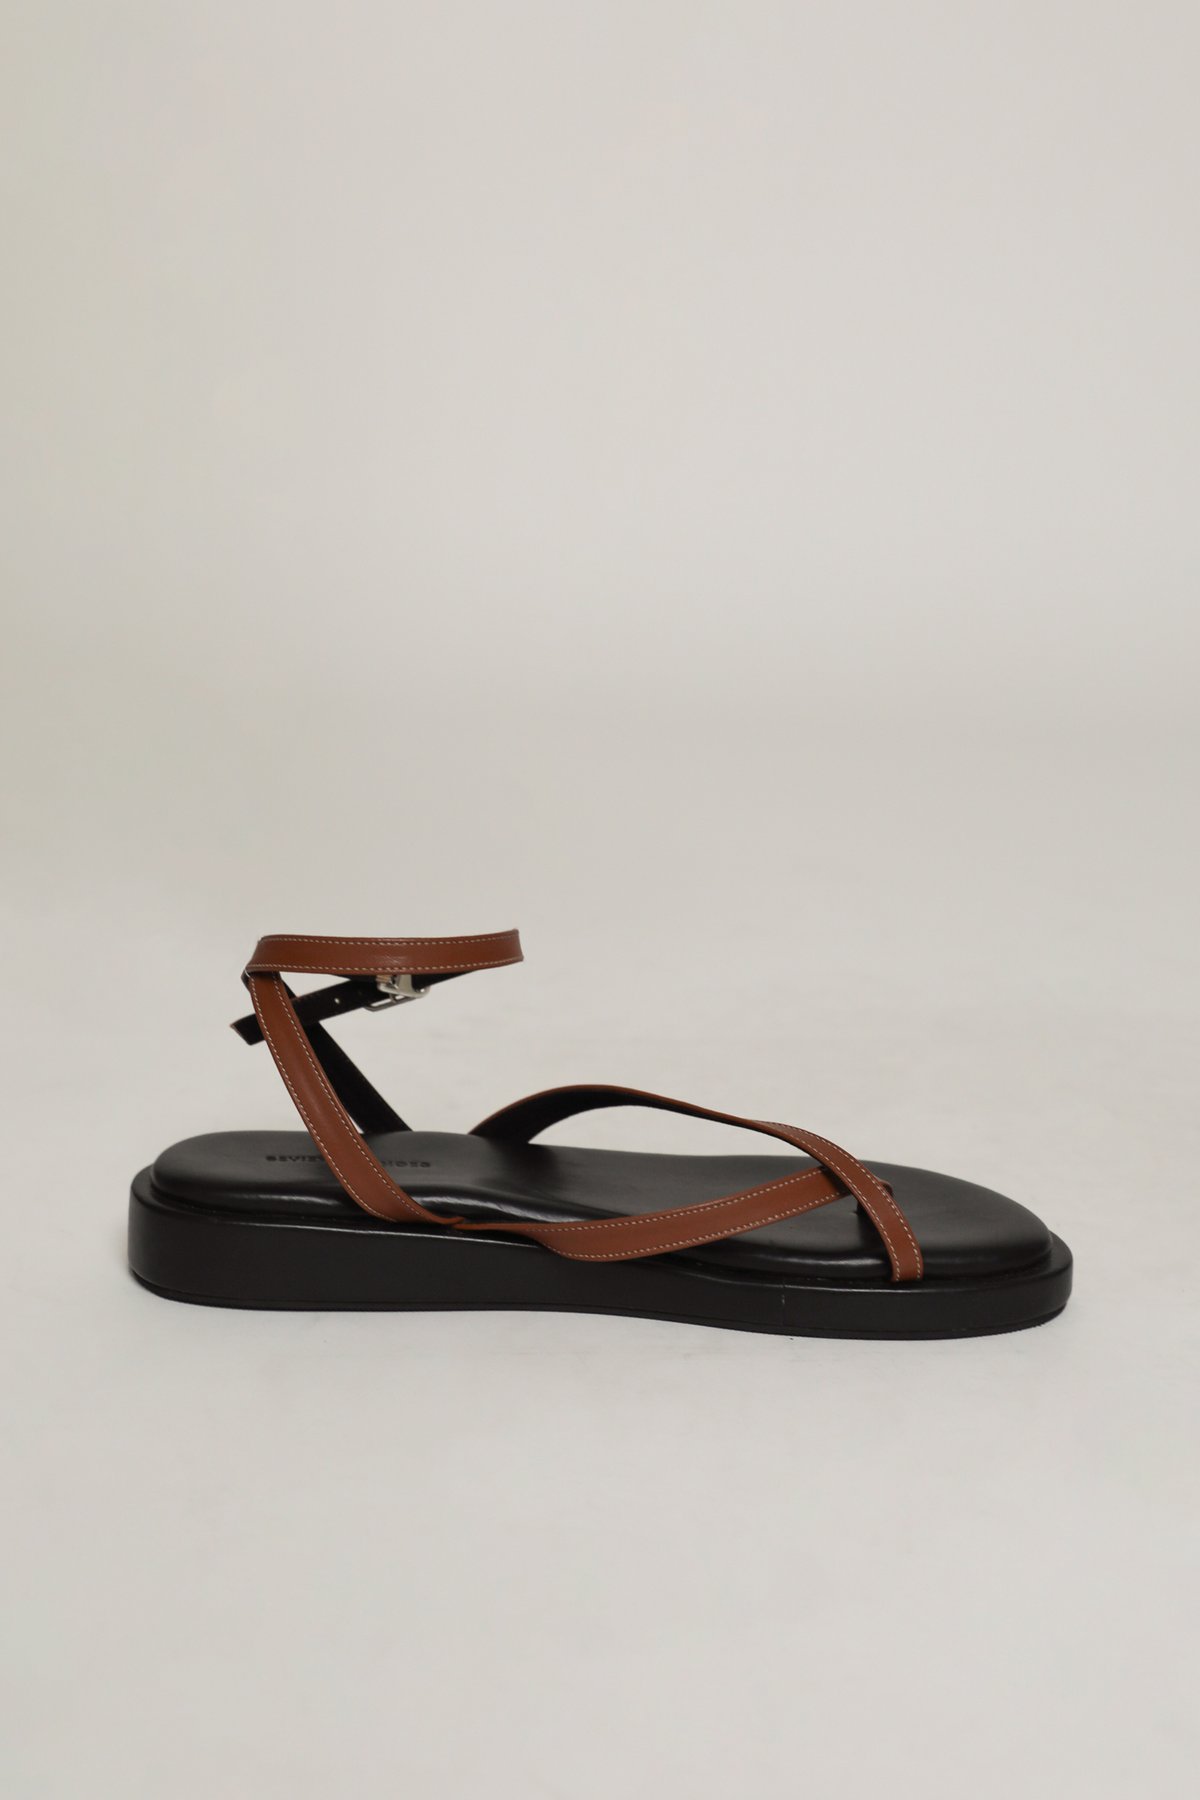 Sevieyanashoes (Criss Cross Sandals - Black & Brown)